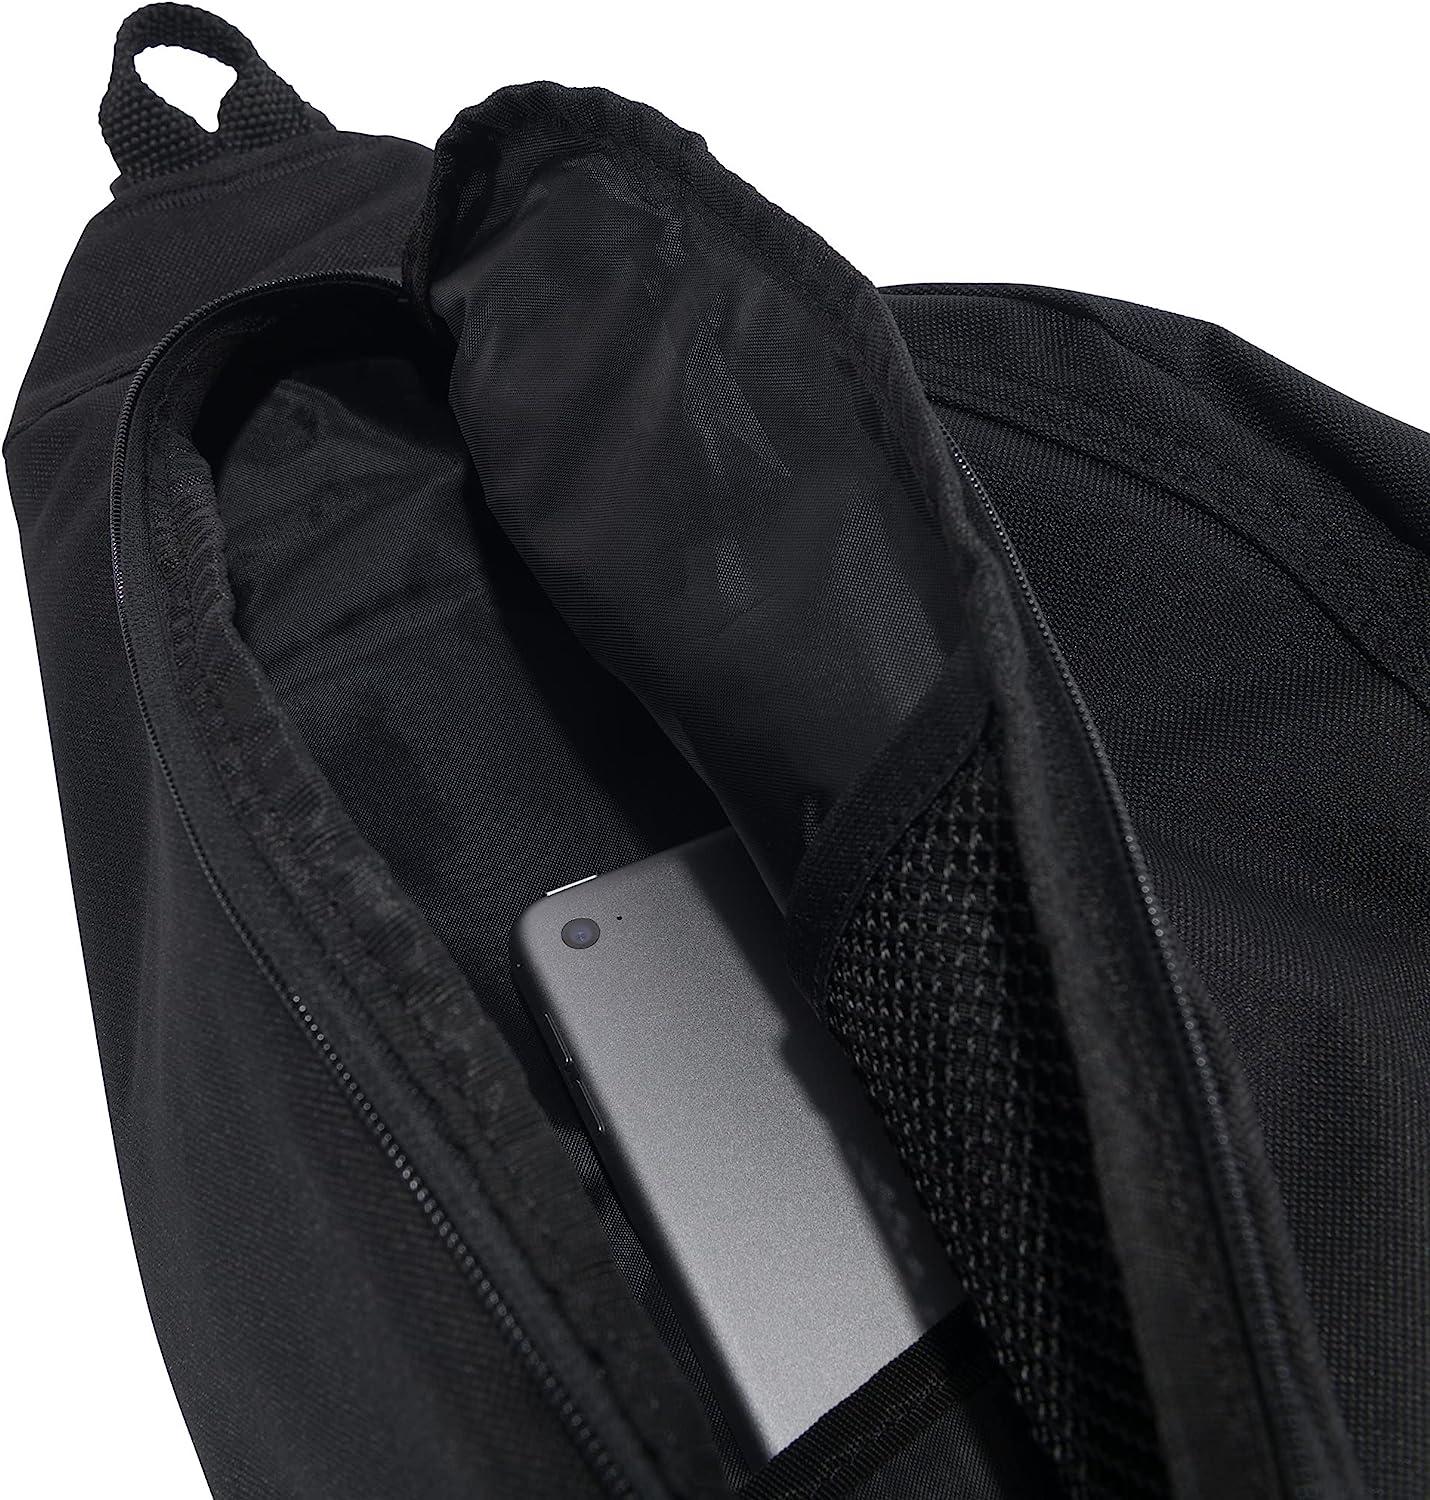 Carhartt Mono Sling Backpack | Brown